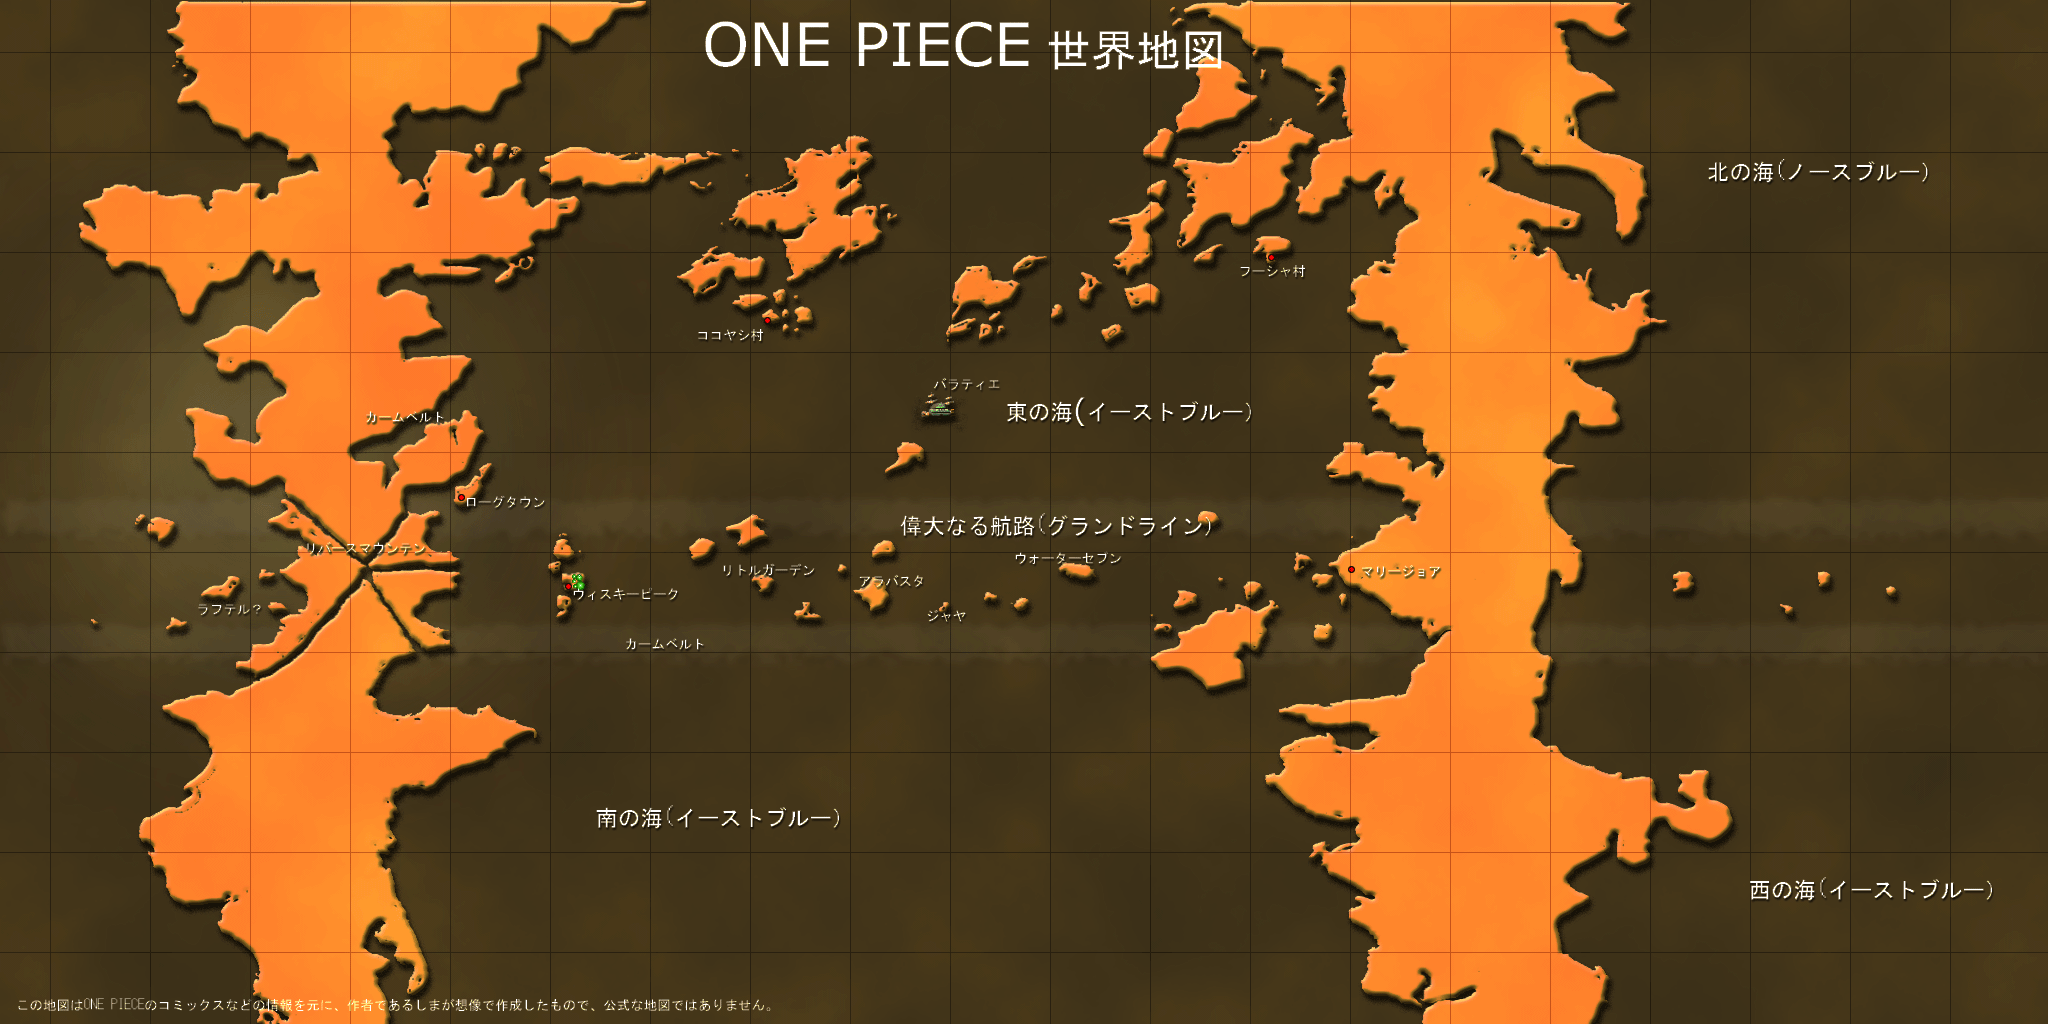 One Pieceの世界地図を作ろう